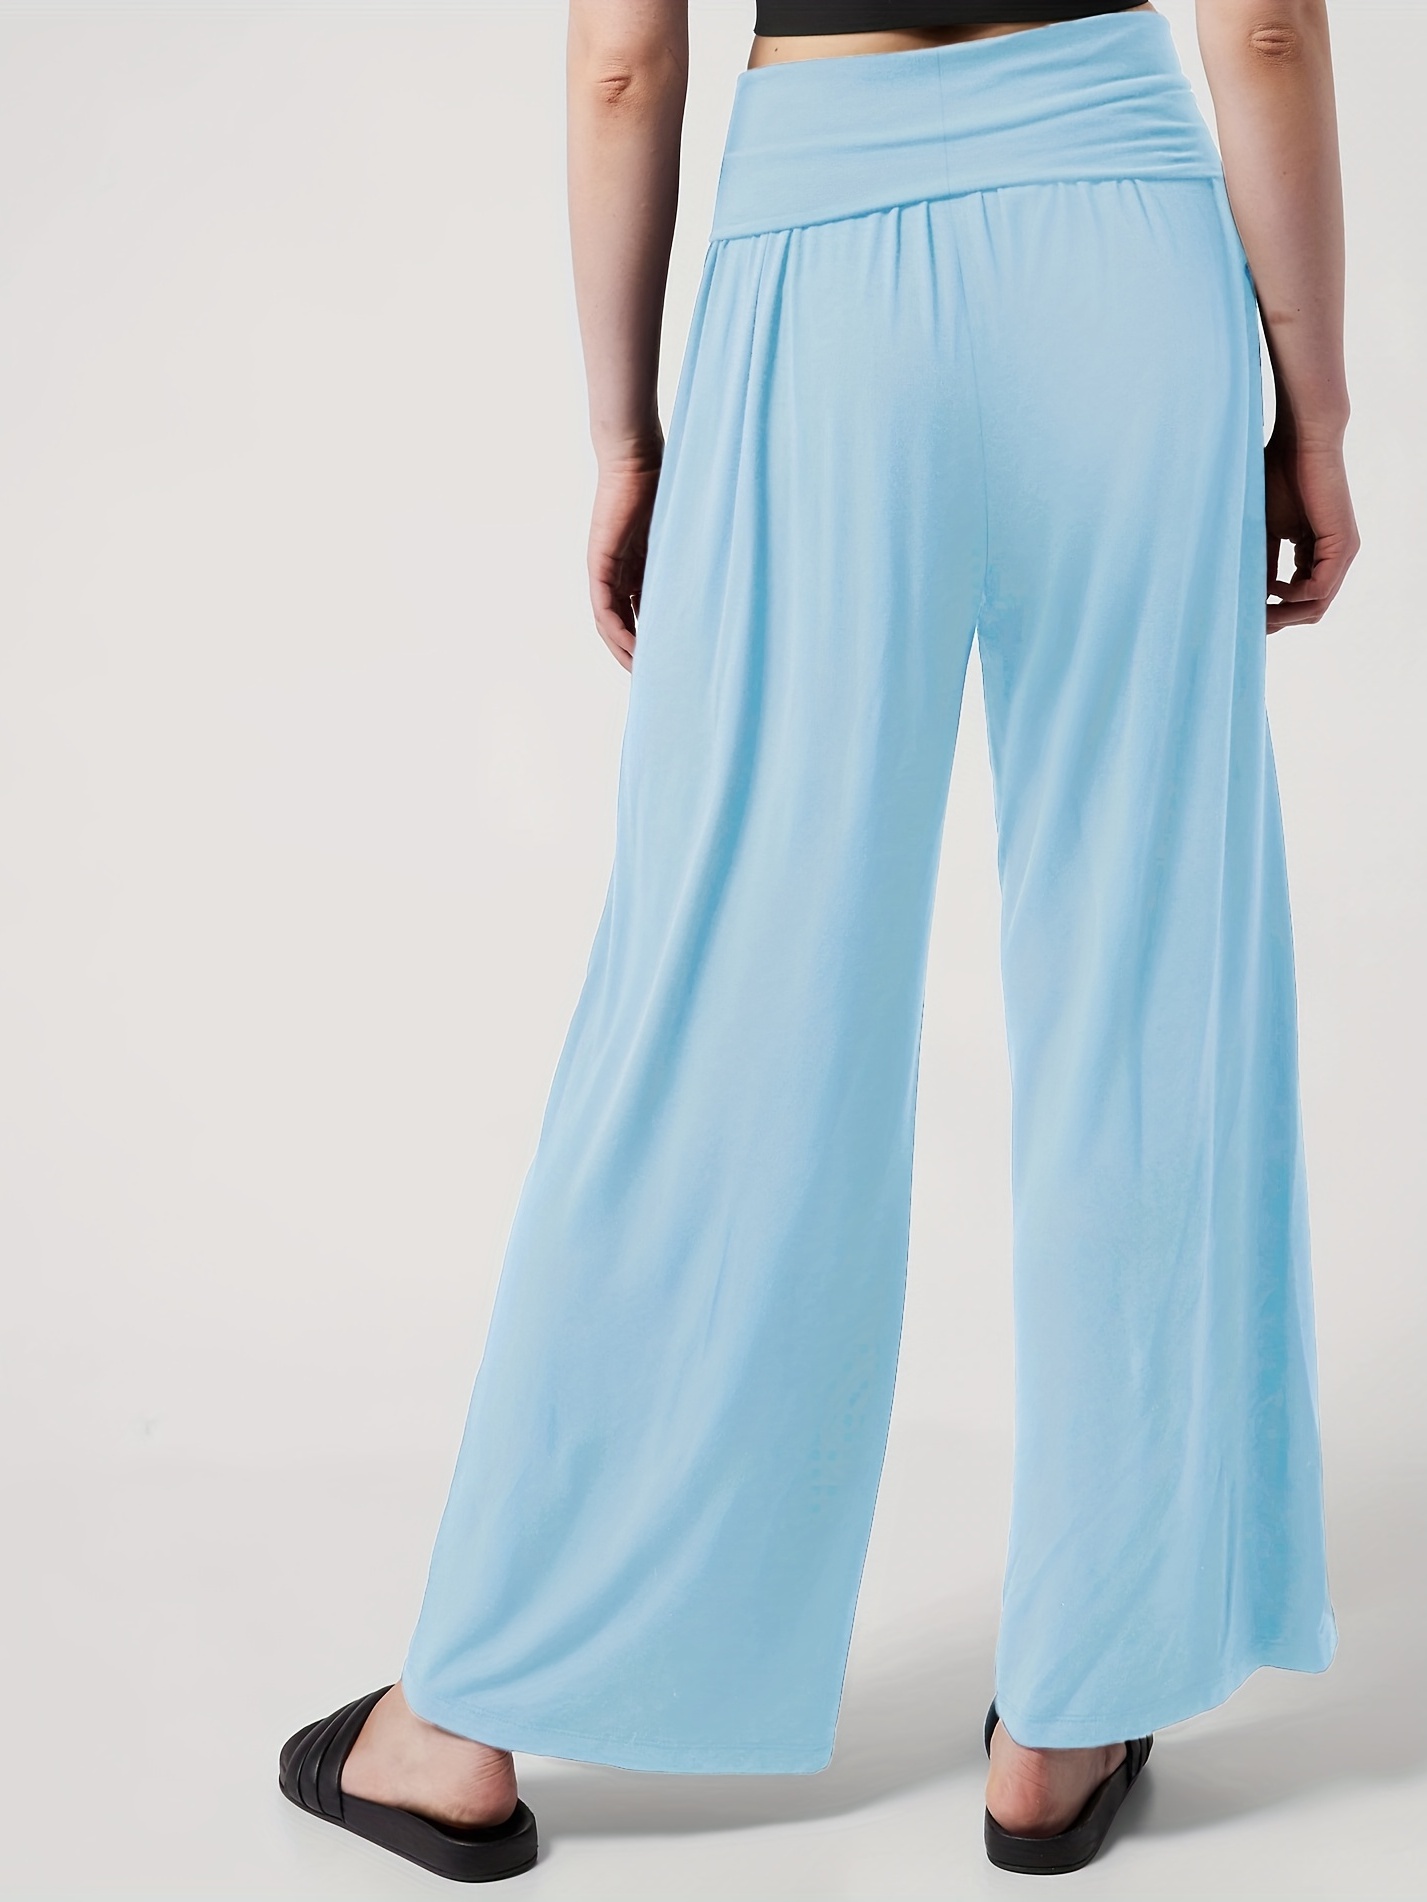 pxiakgy yoga pants fashion women's sports pure color pocket loose casual  shorts yoga pants blue + m 